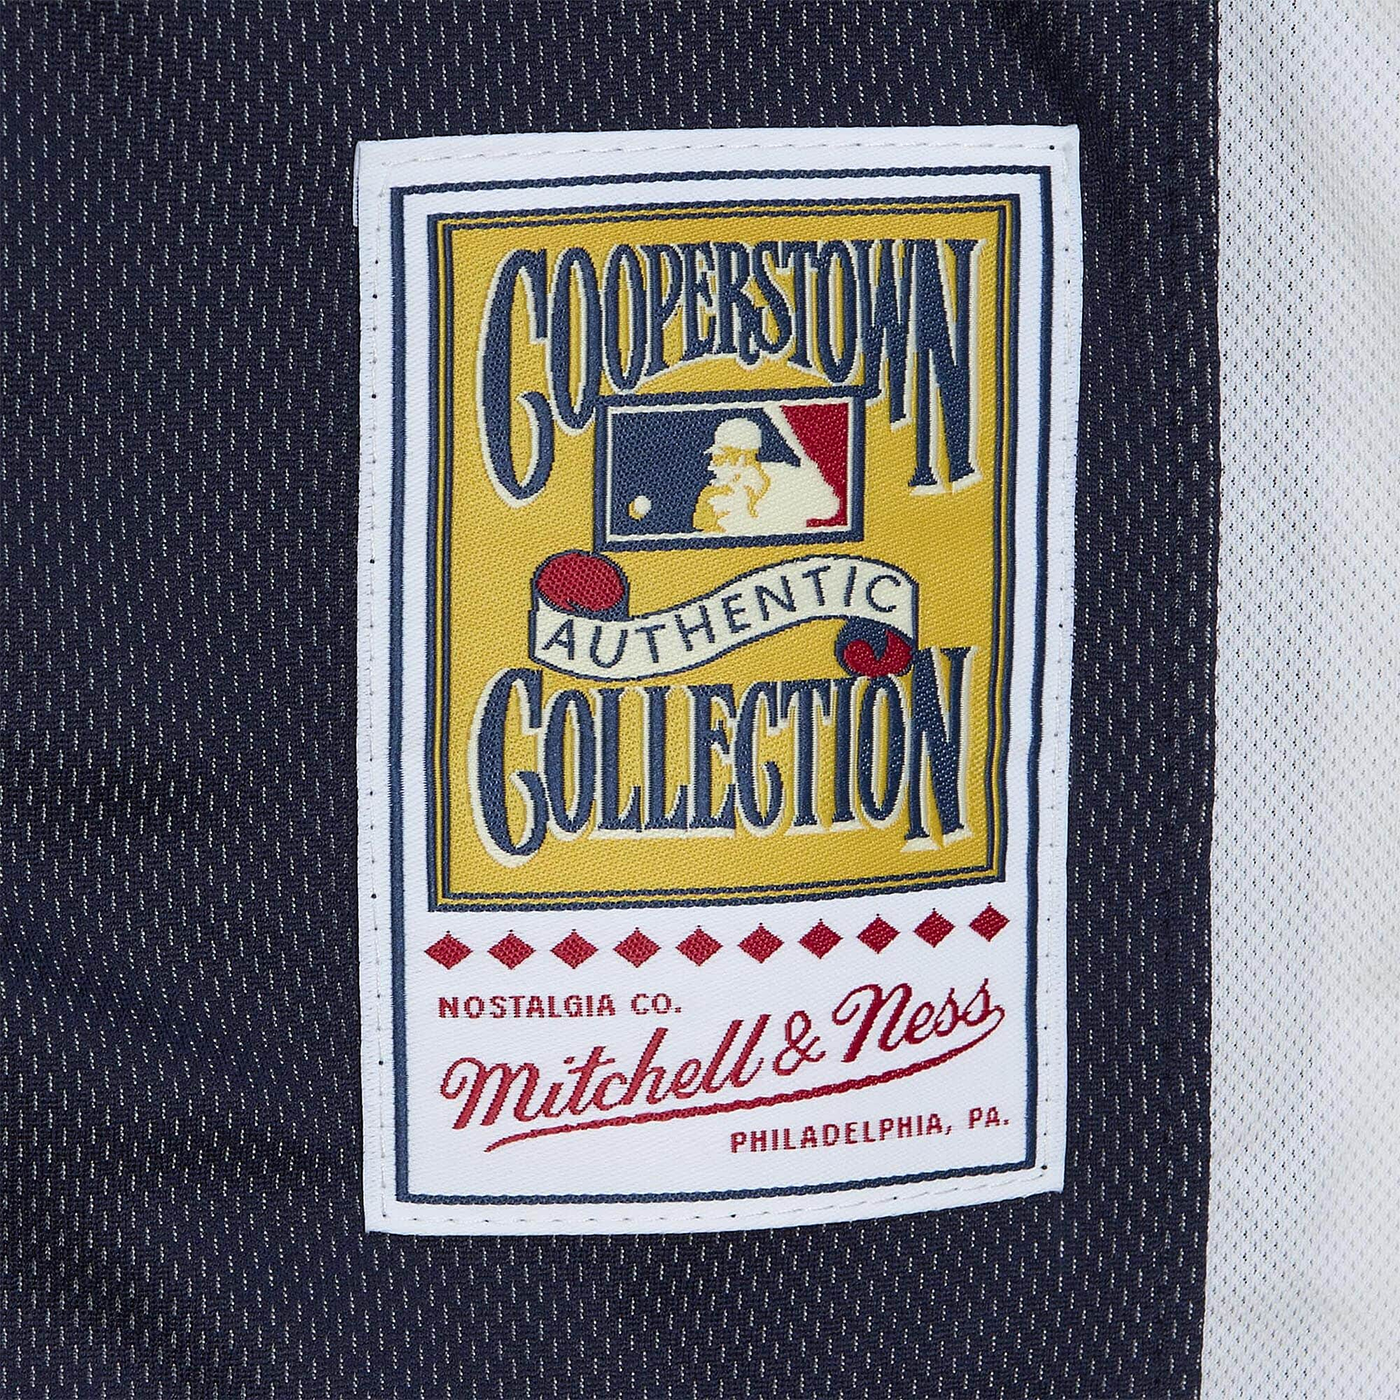 Mitchell & Ness x Seattle Mariners Griffey Jr. Navy T-Shirt